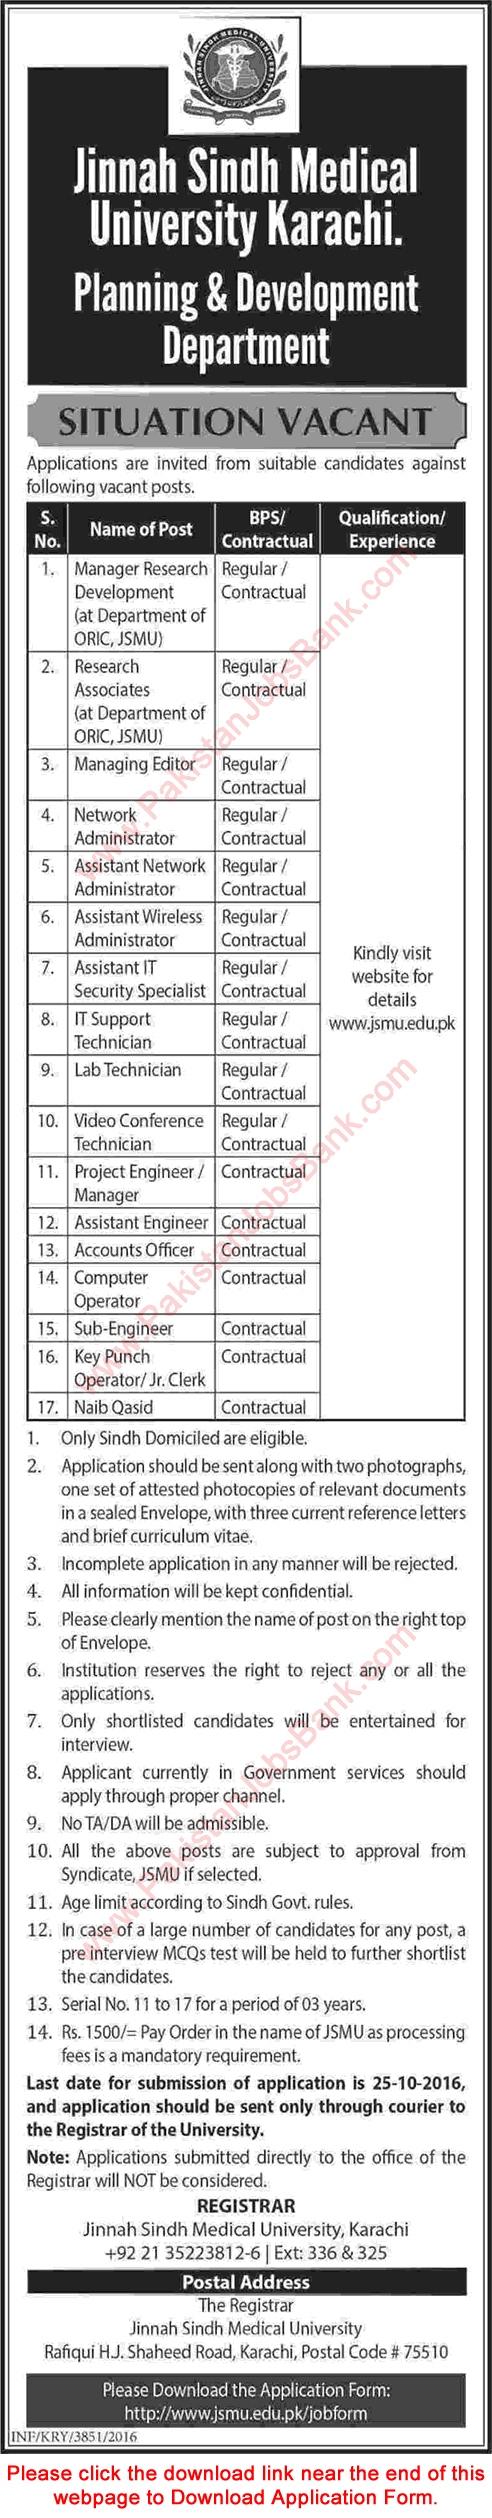 Jinnah Sindh Medical University Karachi Jobs October 2016 Application Form Download Latest